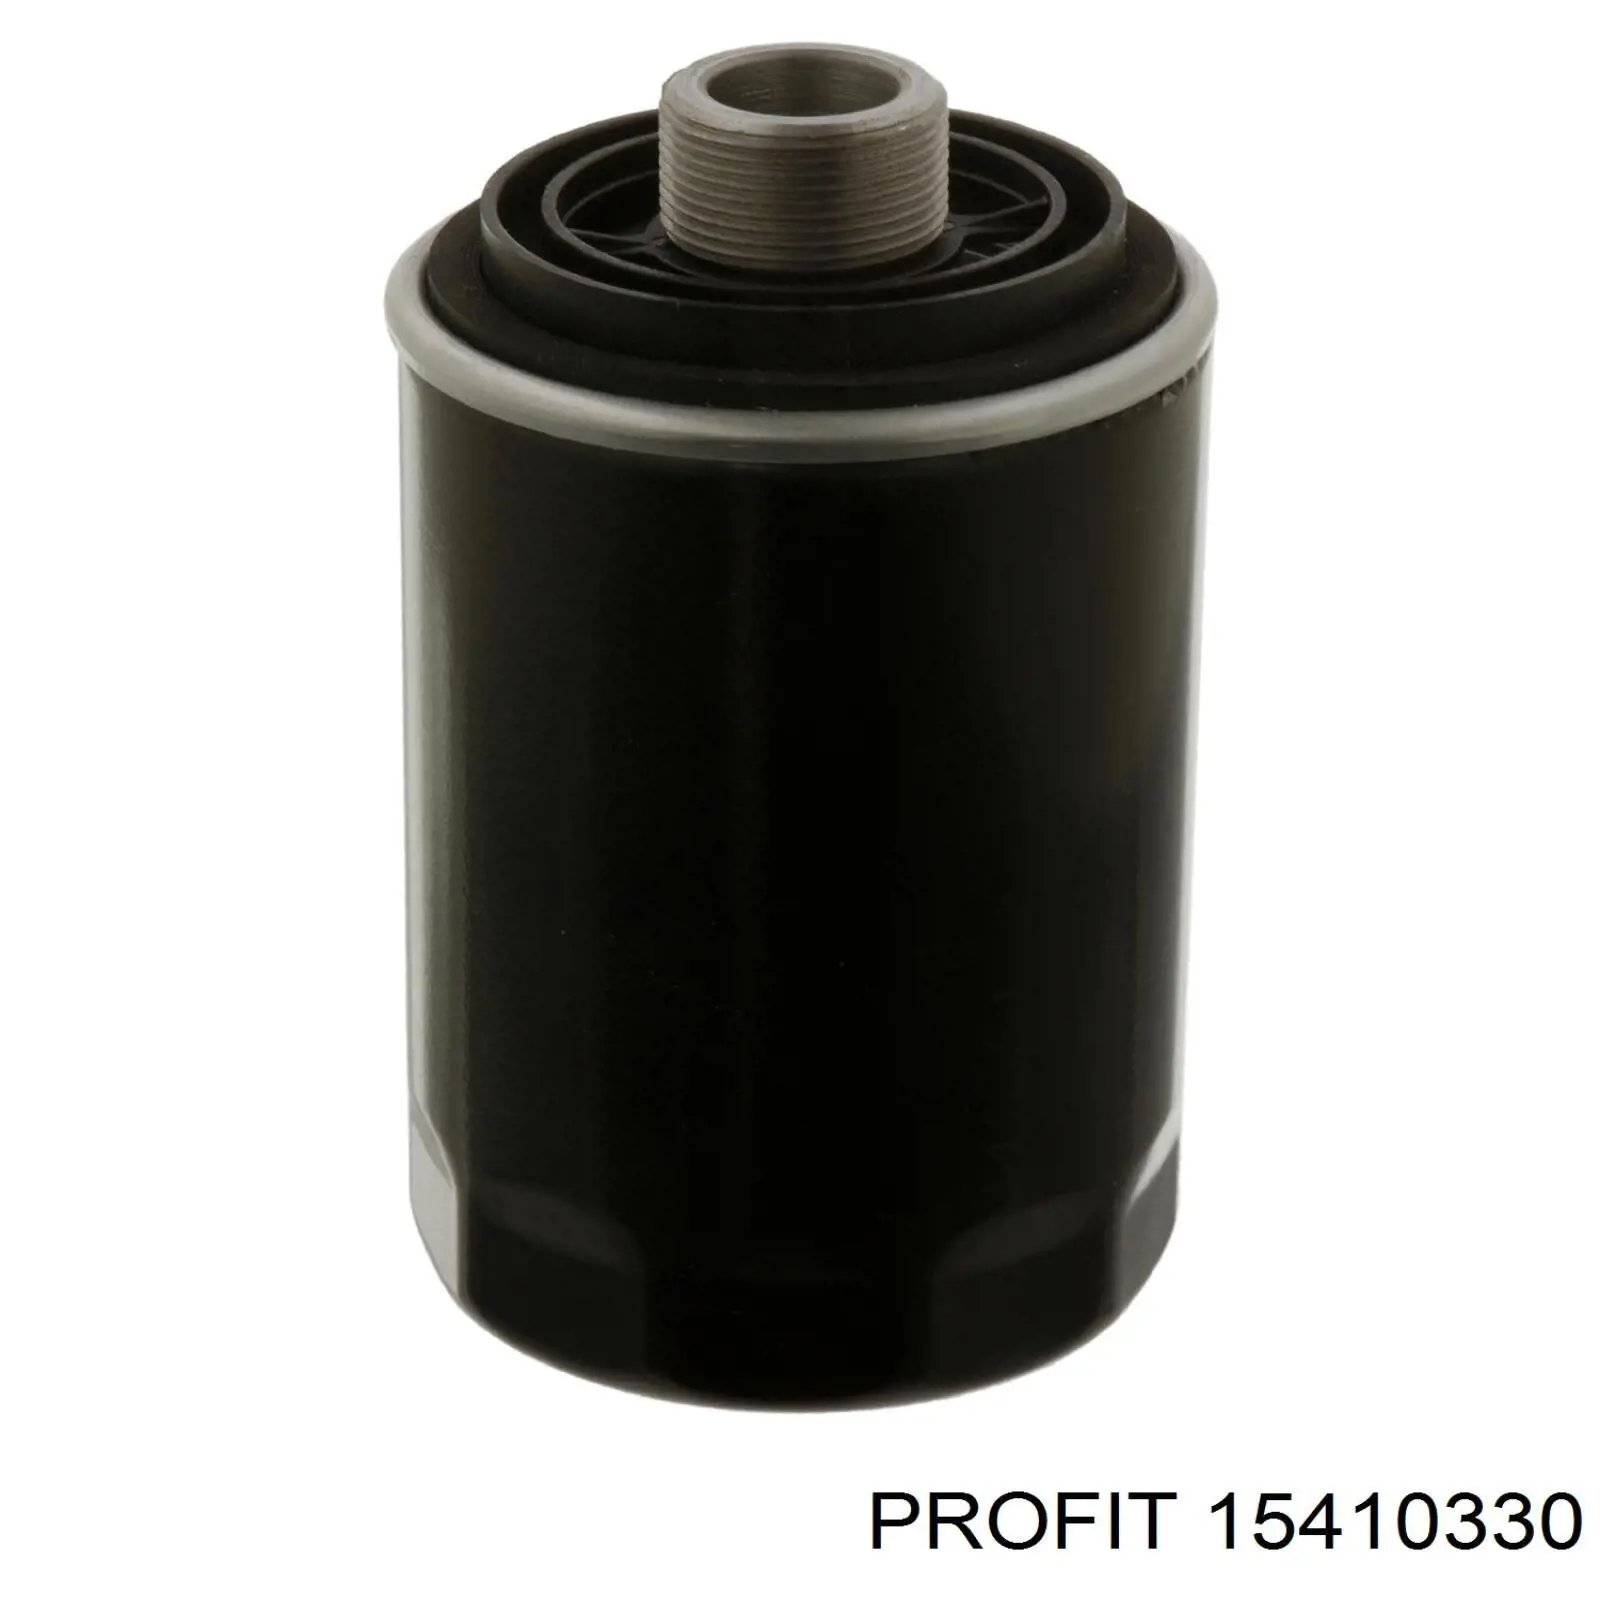 15410330 Profit filtro de aceite